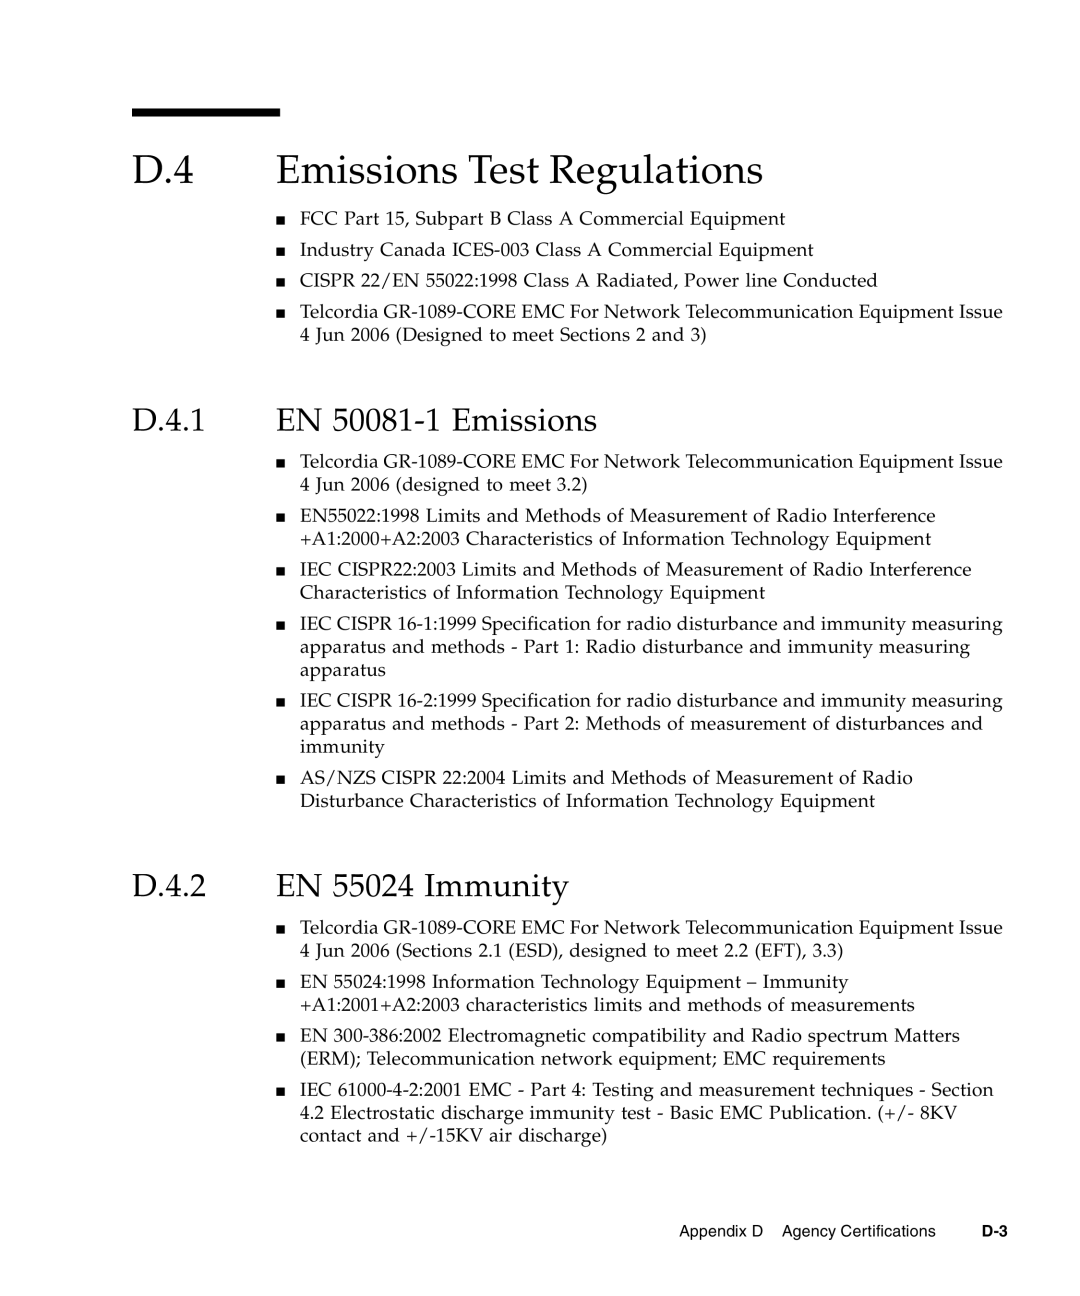 Sun Microsystems CP3240 manual D.4 Emissions Test Regulations, D.4.1 EN 50081-1 Emissions, D.4.2 EN 55024 Immunity 